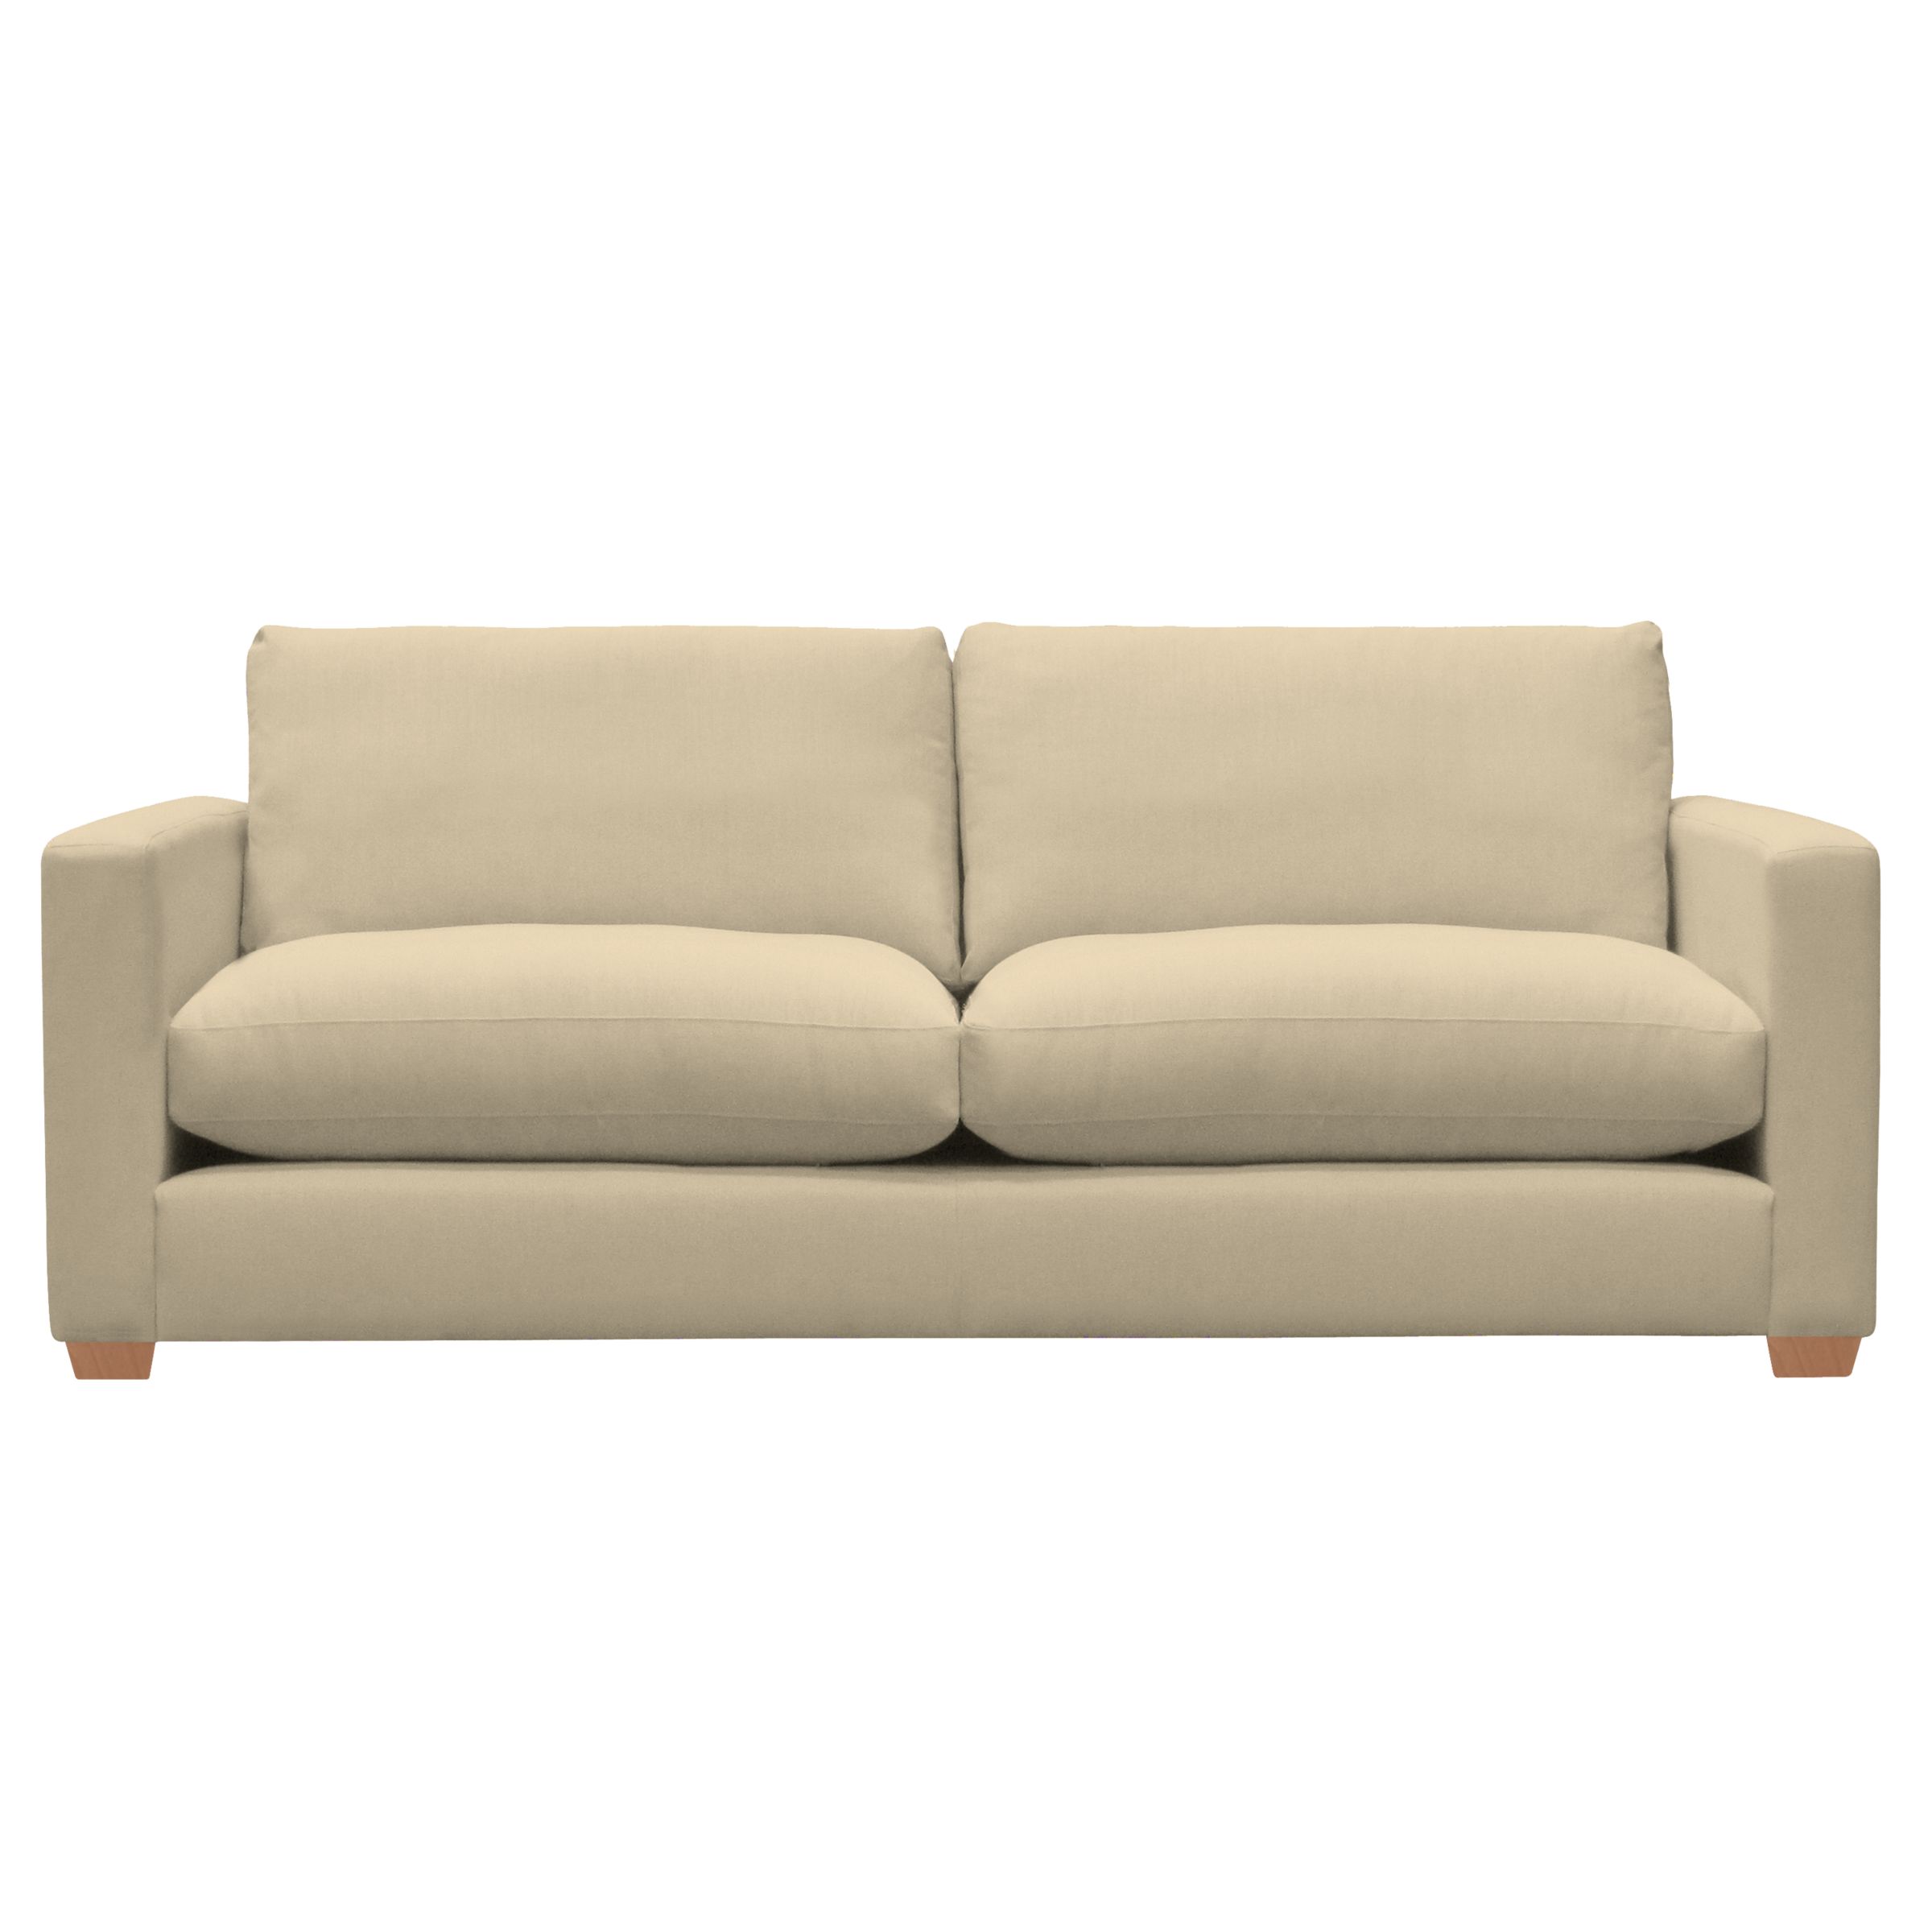 John Lewis Options Slim Arm Grand Sofa, Eaton Taupe, width 225cm